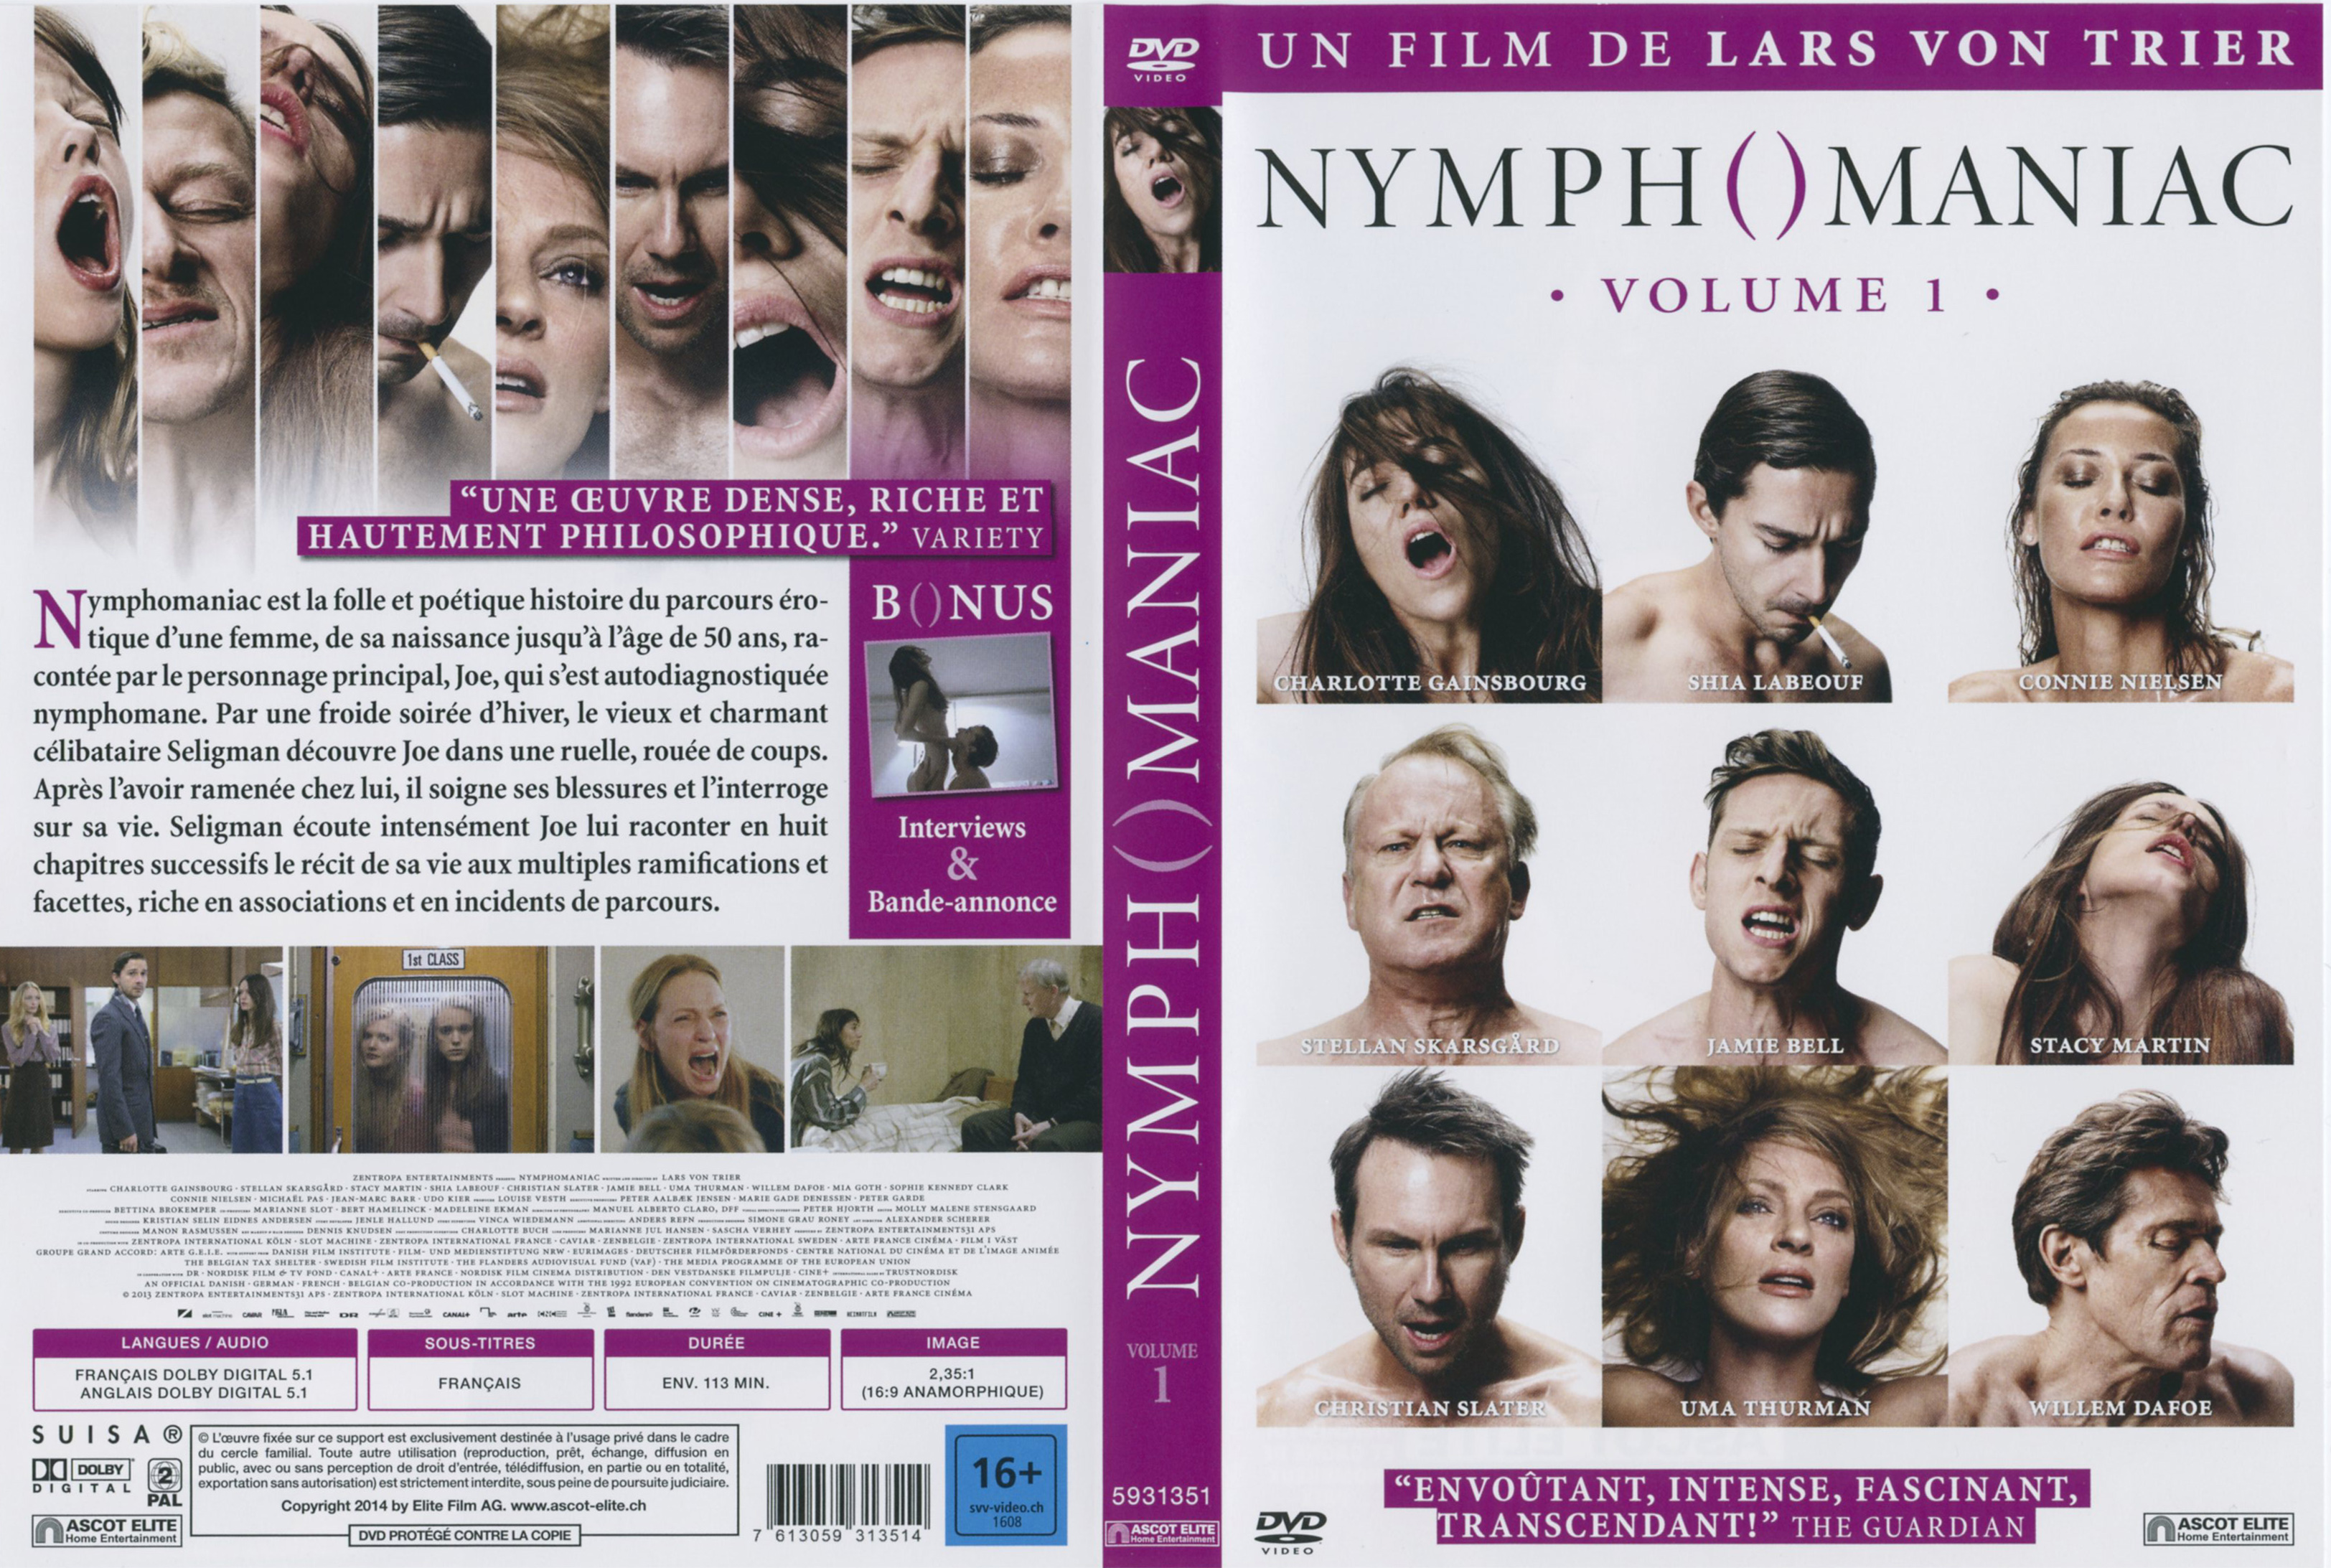 Jaquette DVD Nymphomaniac vol 1 v2